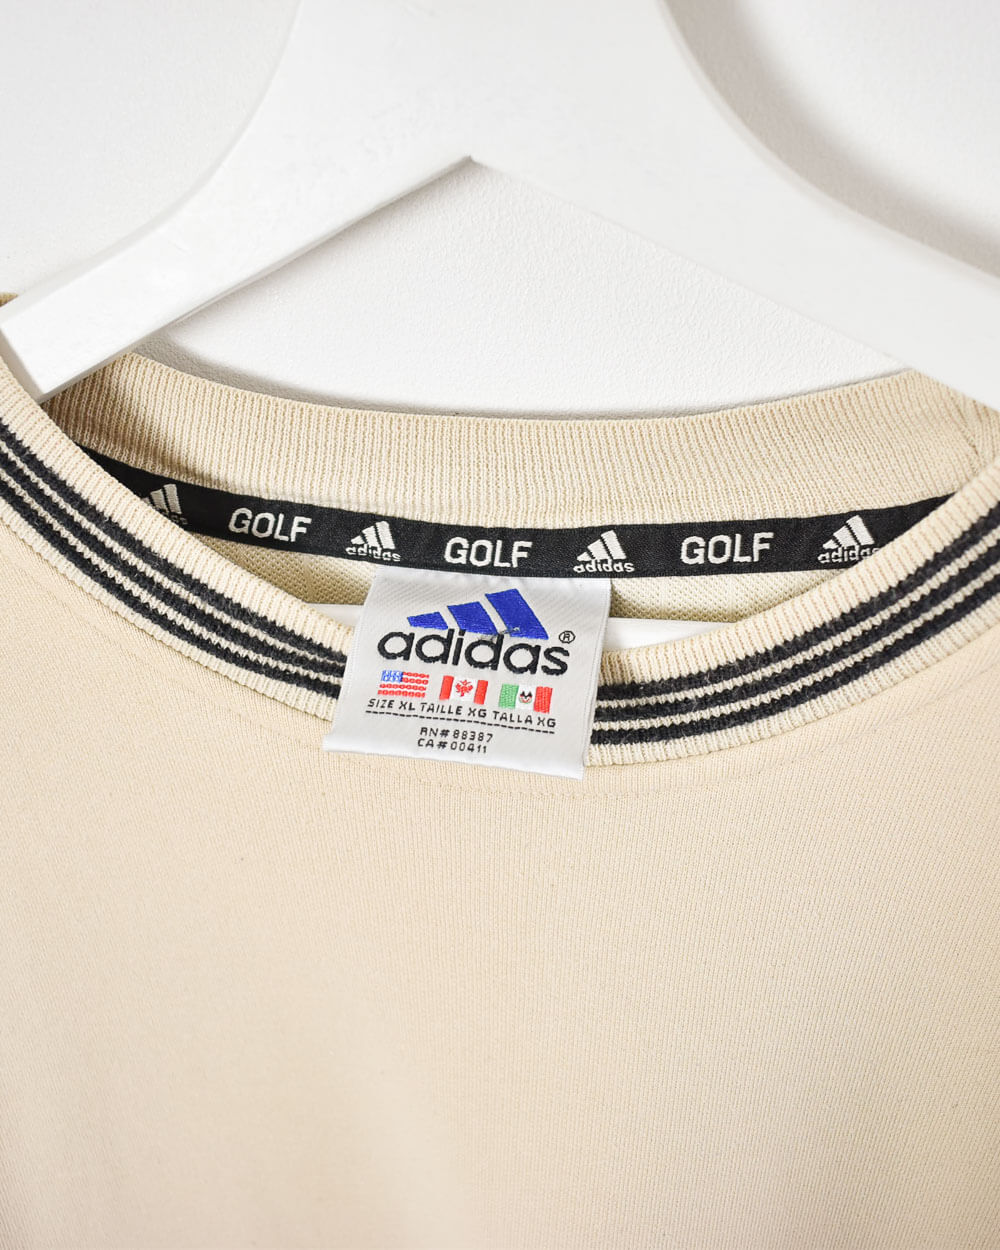 Adidas Golf Sweatshirt - XX-Large - Domno Vintage 90s, 80s, 00s Retro and Vintage Clothing 